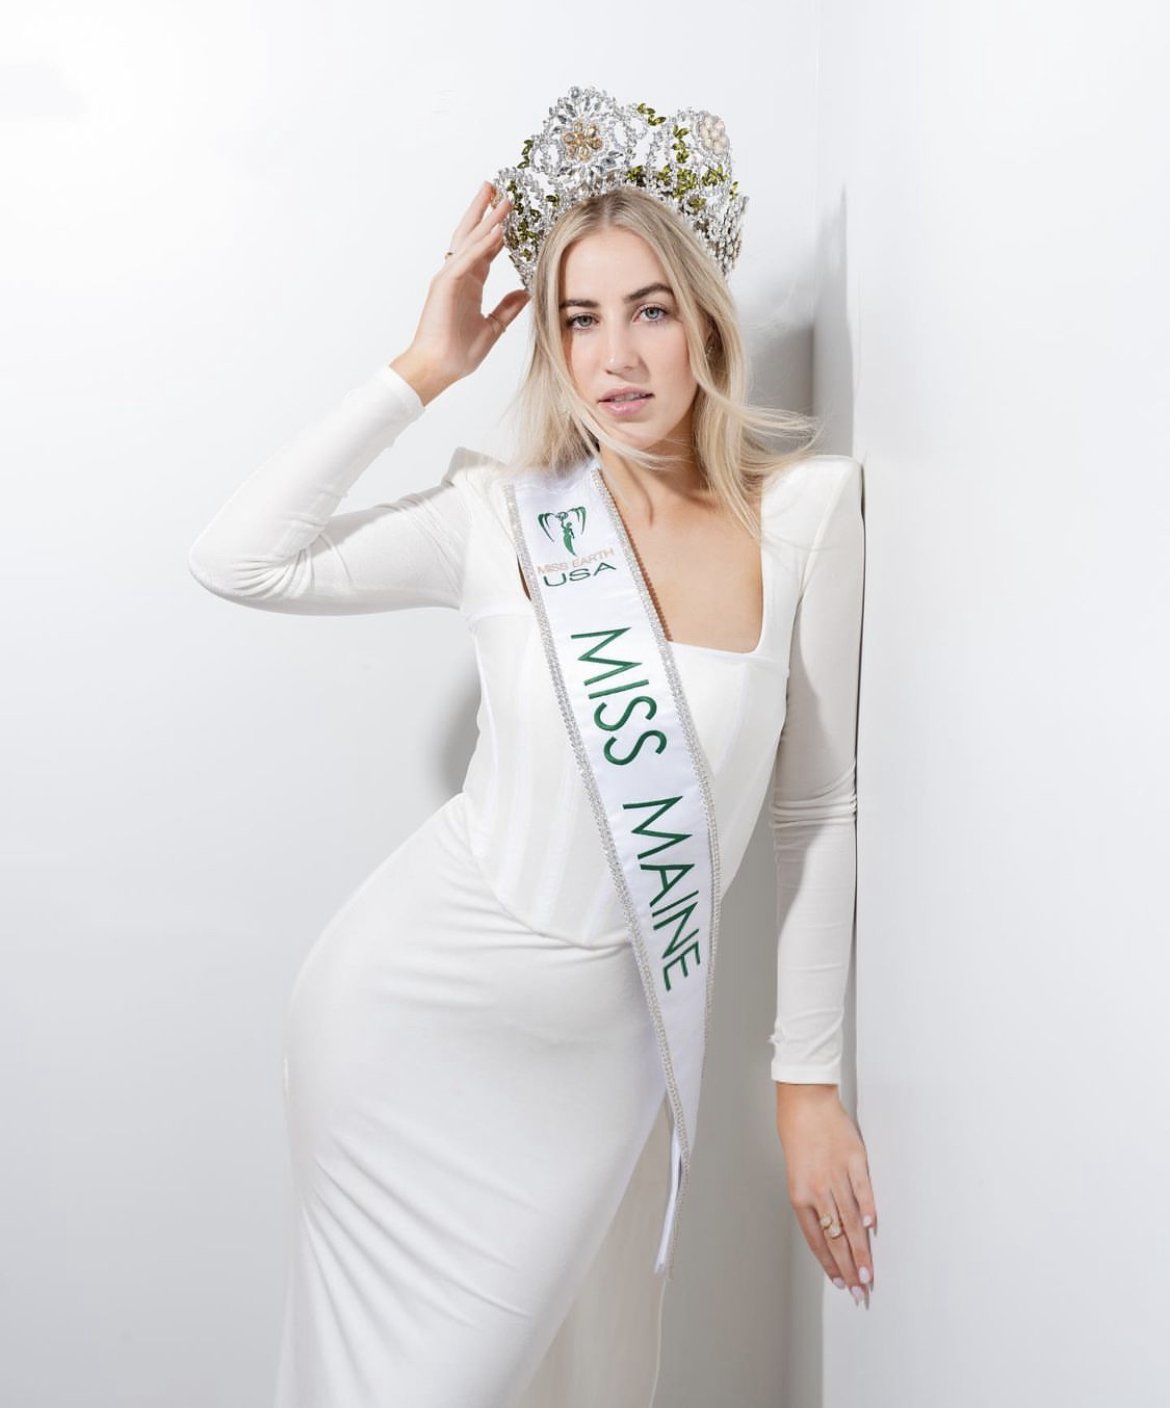 Miss ME Earth USA 2022